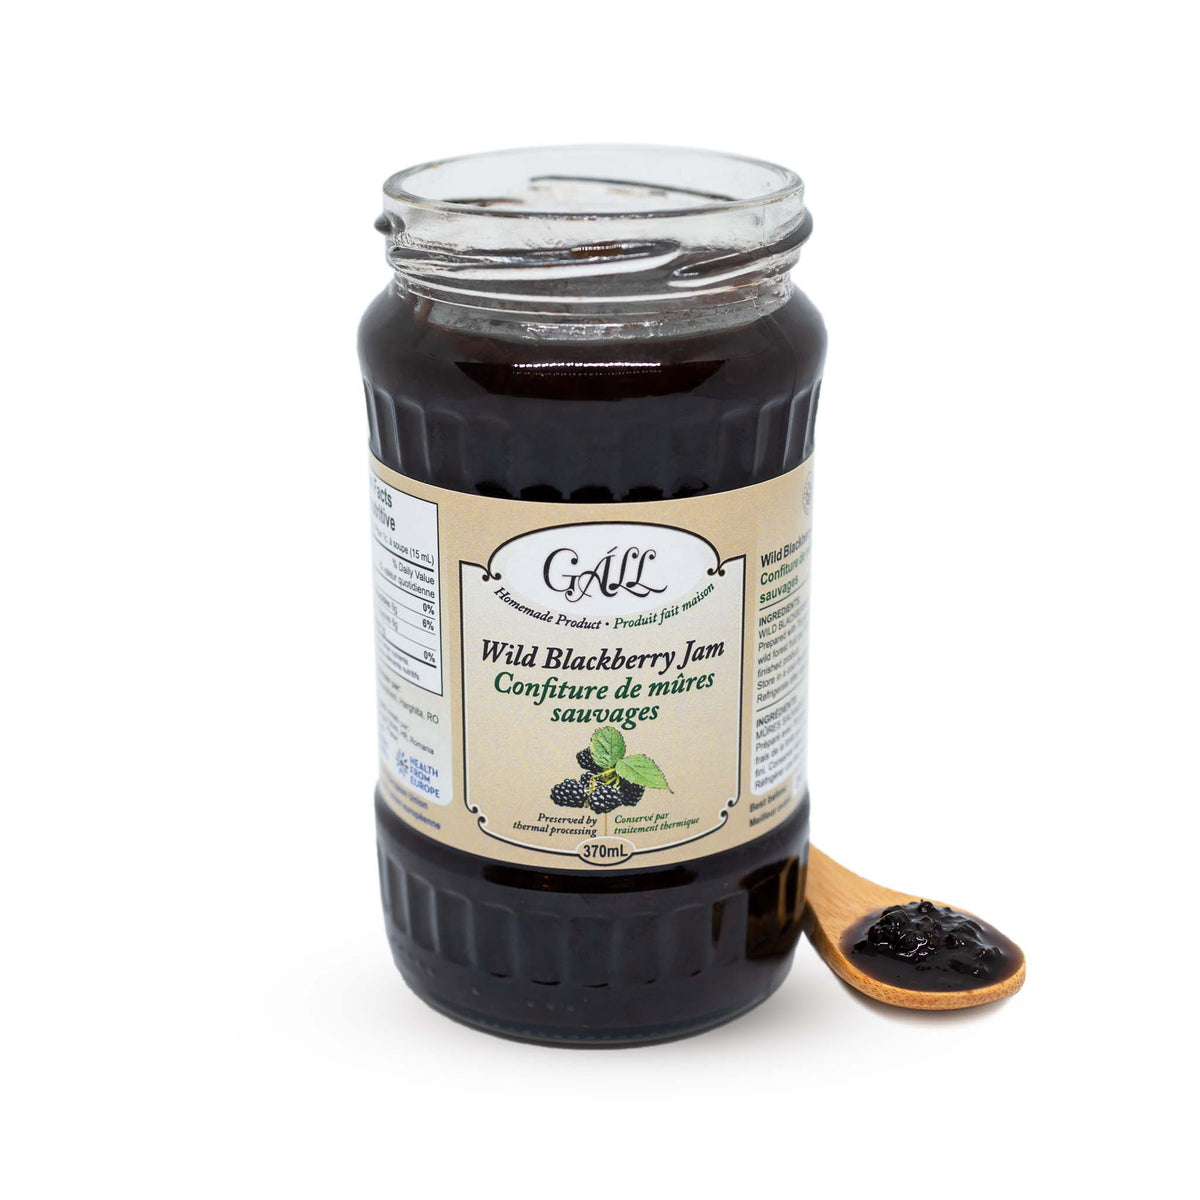 Artisanal Wild Blackberry Jam open jar spoon Health from Europe